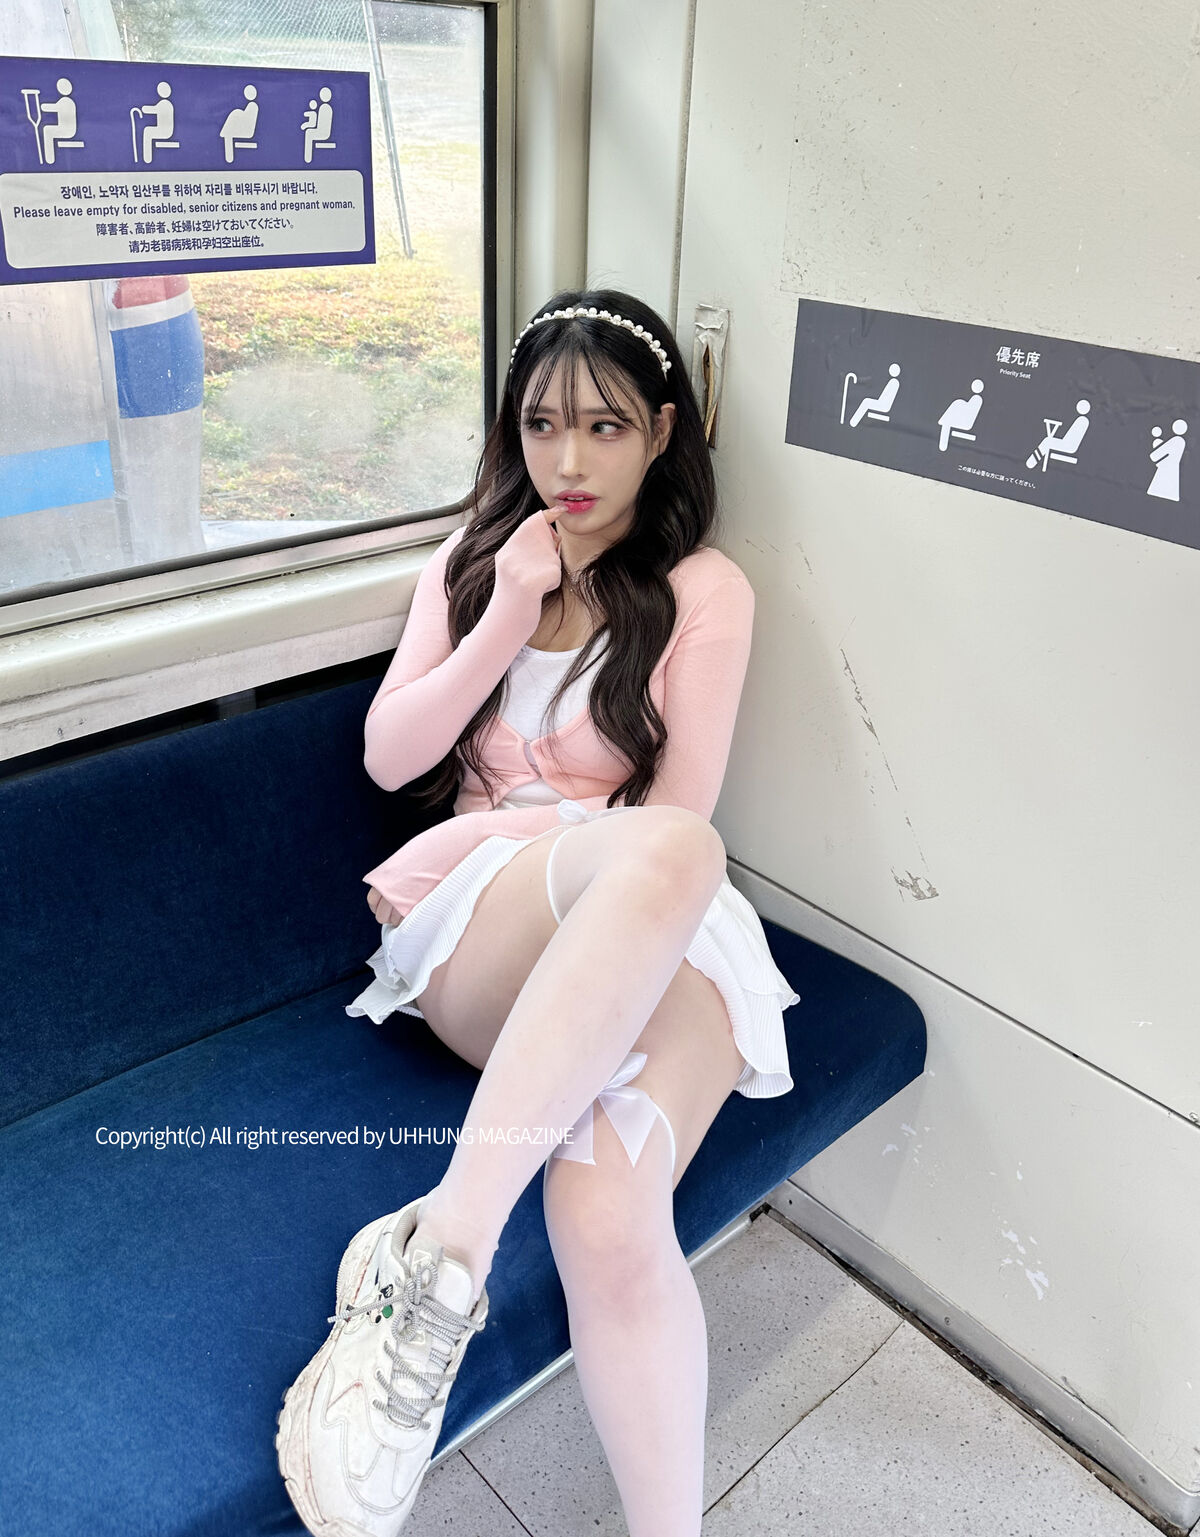 UHHUNG MAGAZINE Hani 하니 The Girlfriend On The Subway Part1 0016 5559079600.jpg